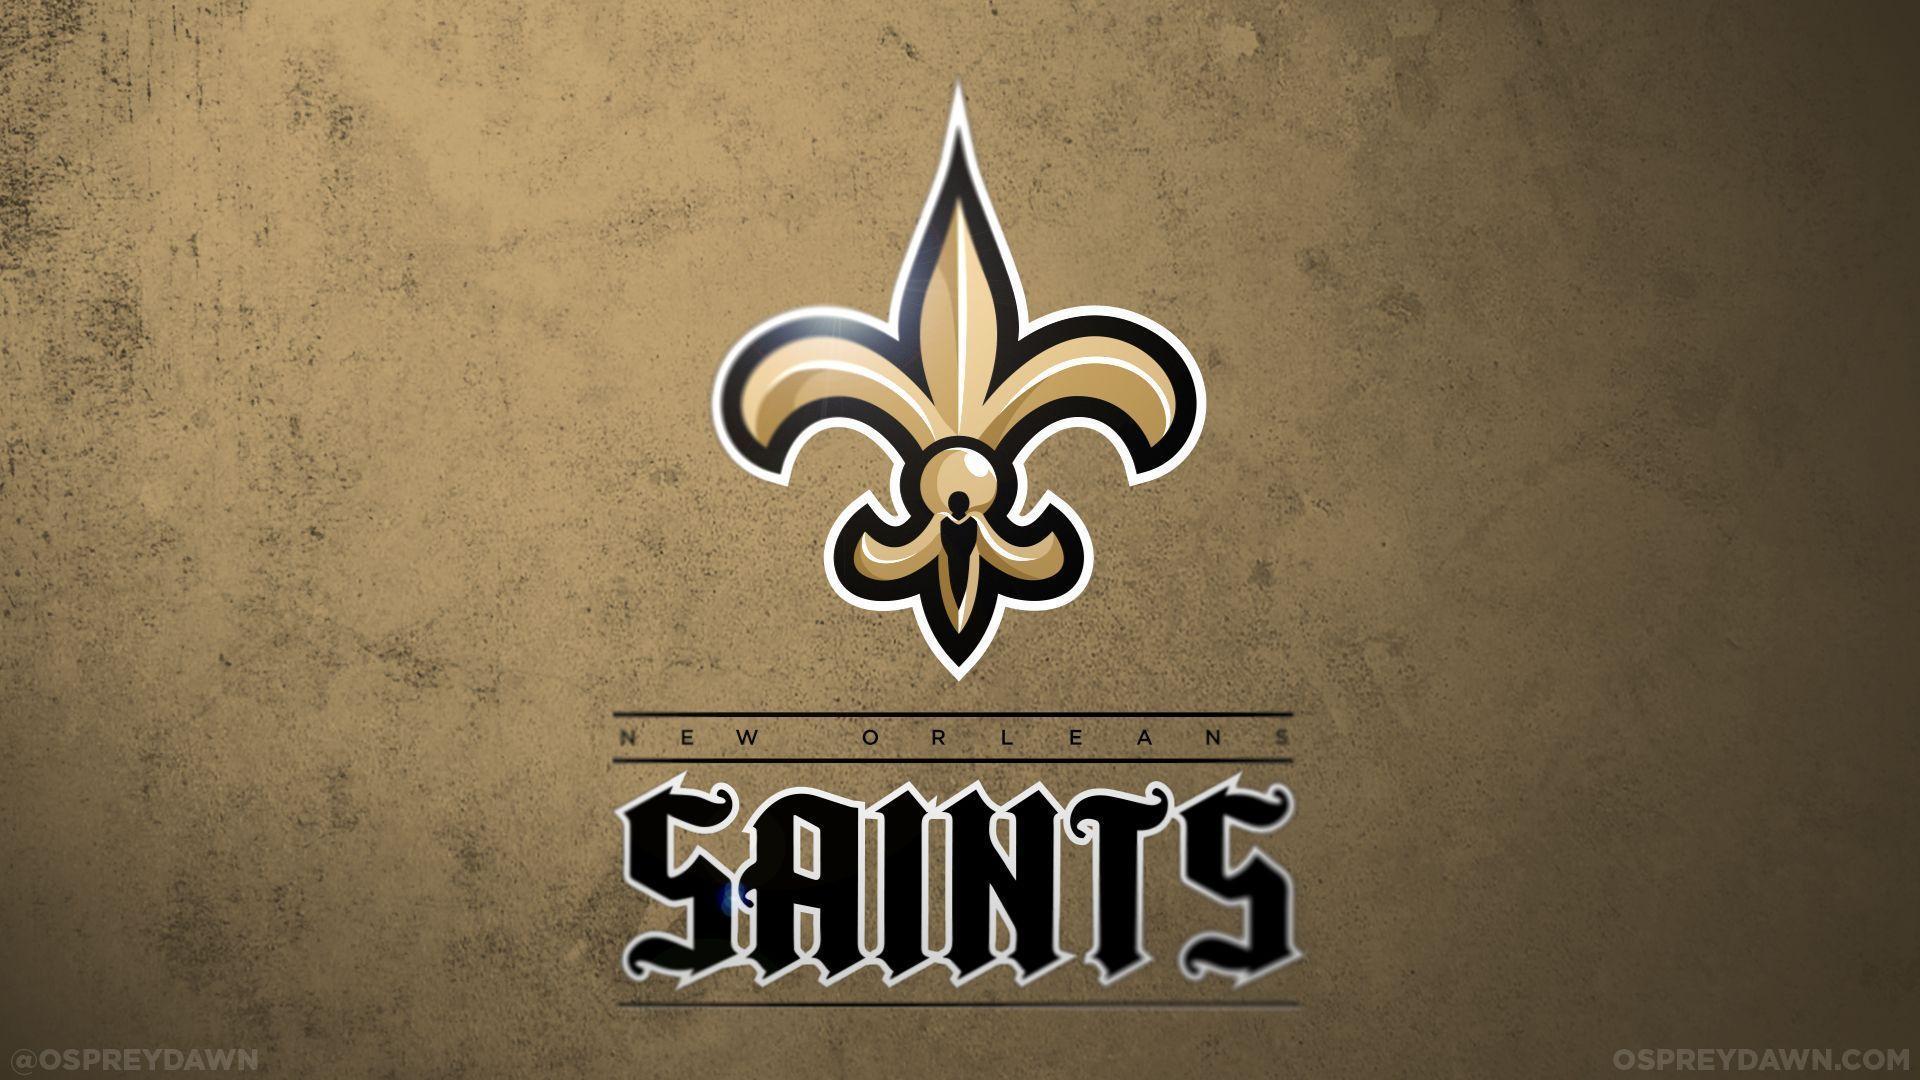 2016 NFL Draft: New Orleans Saints draft needs